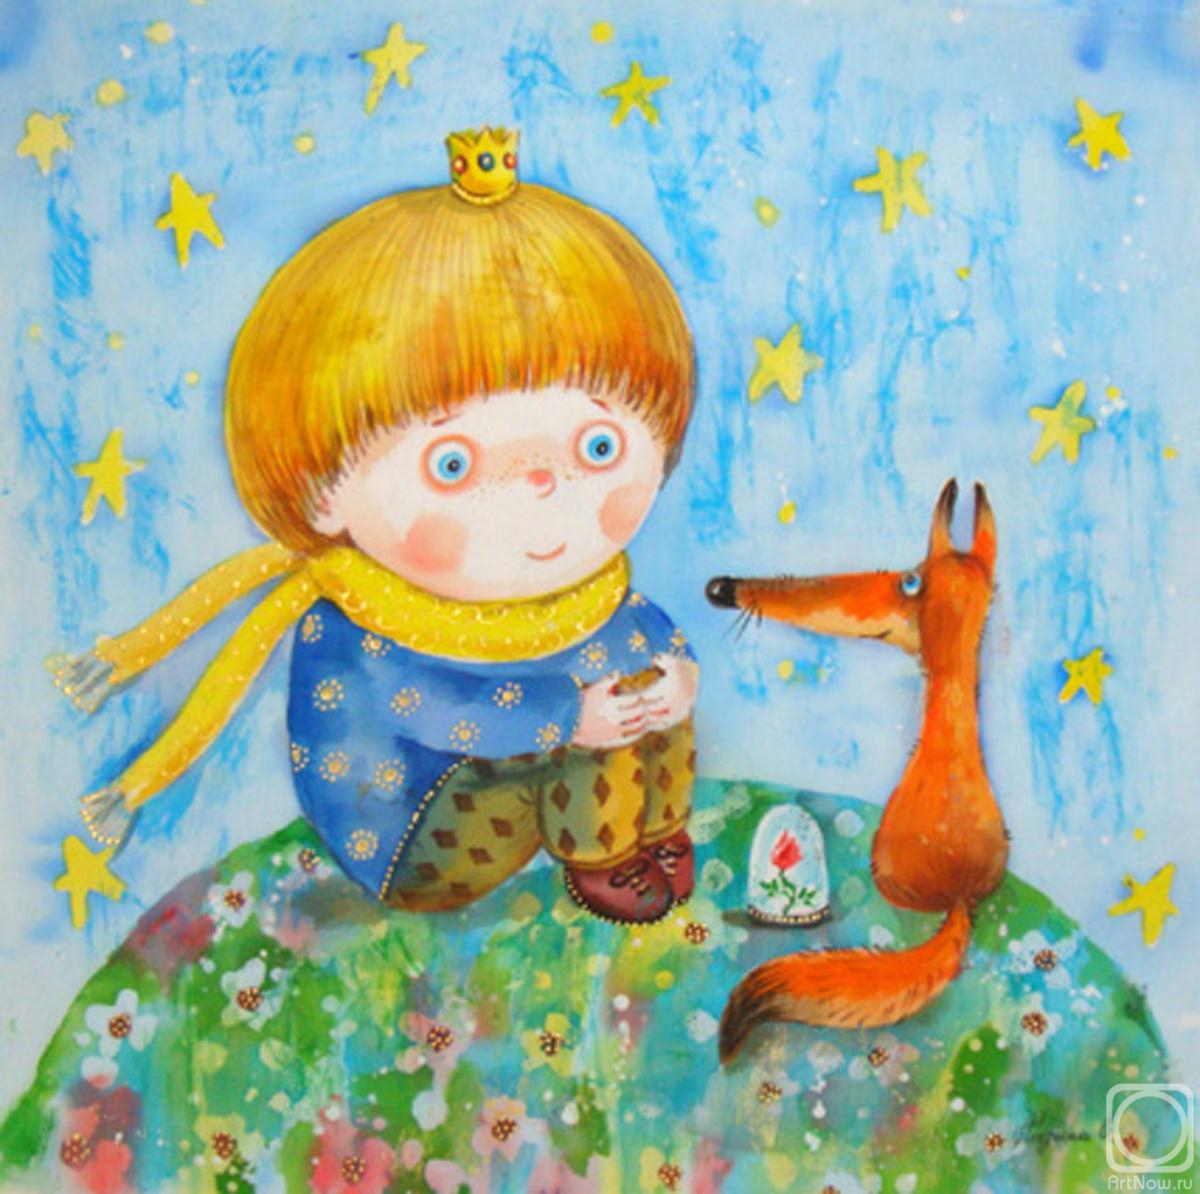 Razina Elena. The Little Prince and the Fox